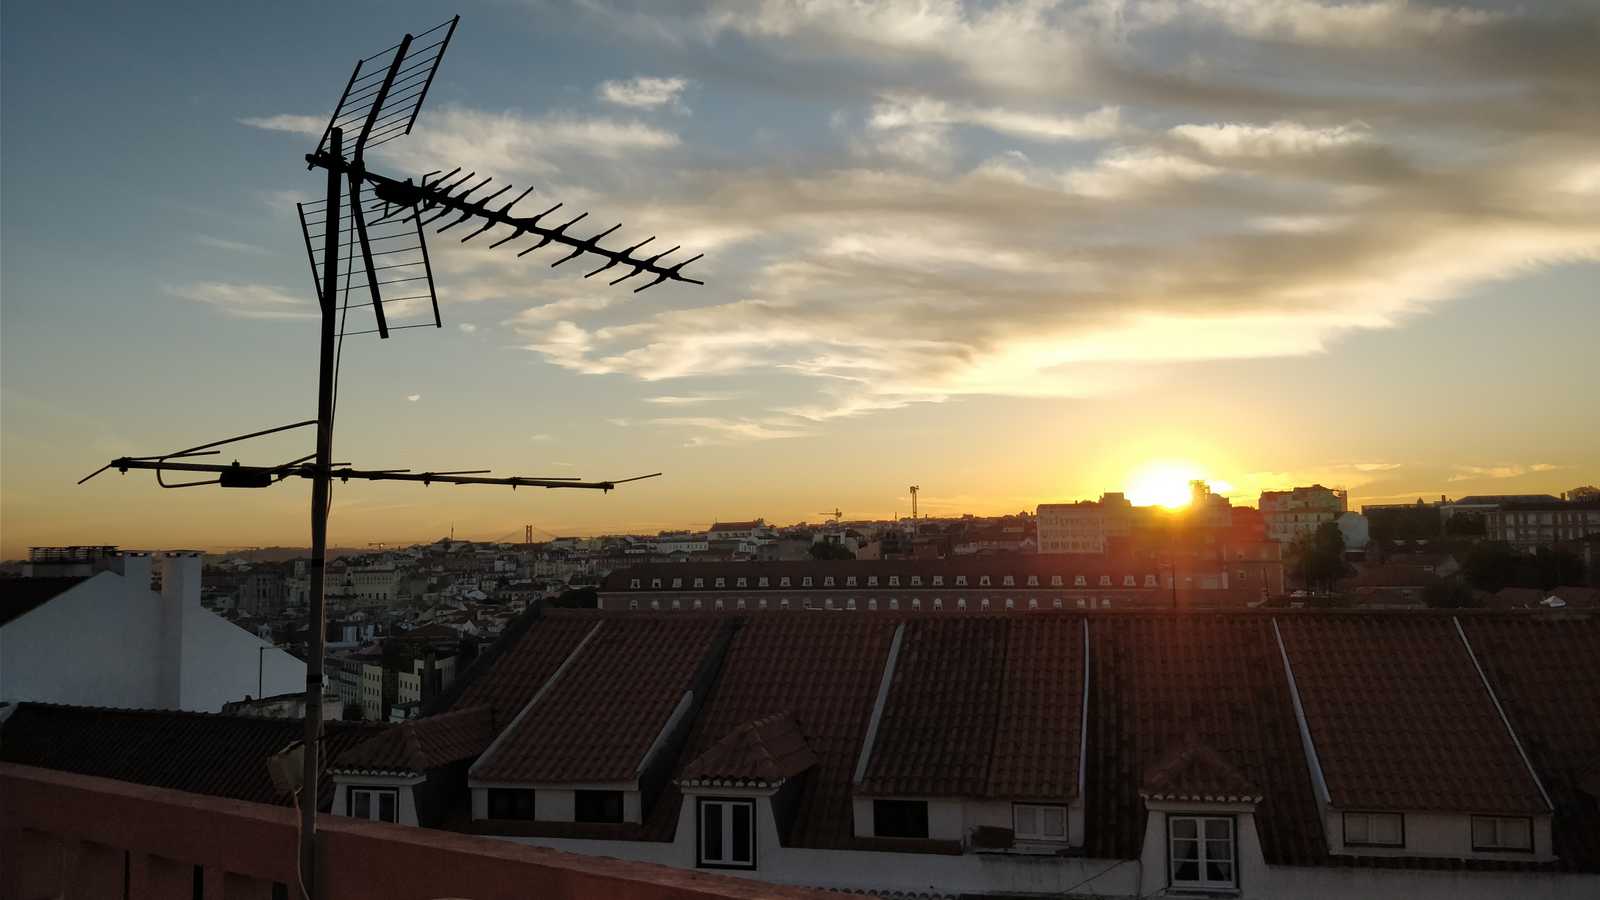 The sun setting in Lisbon